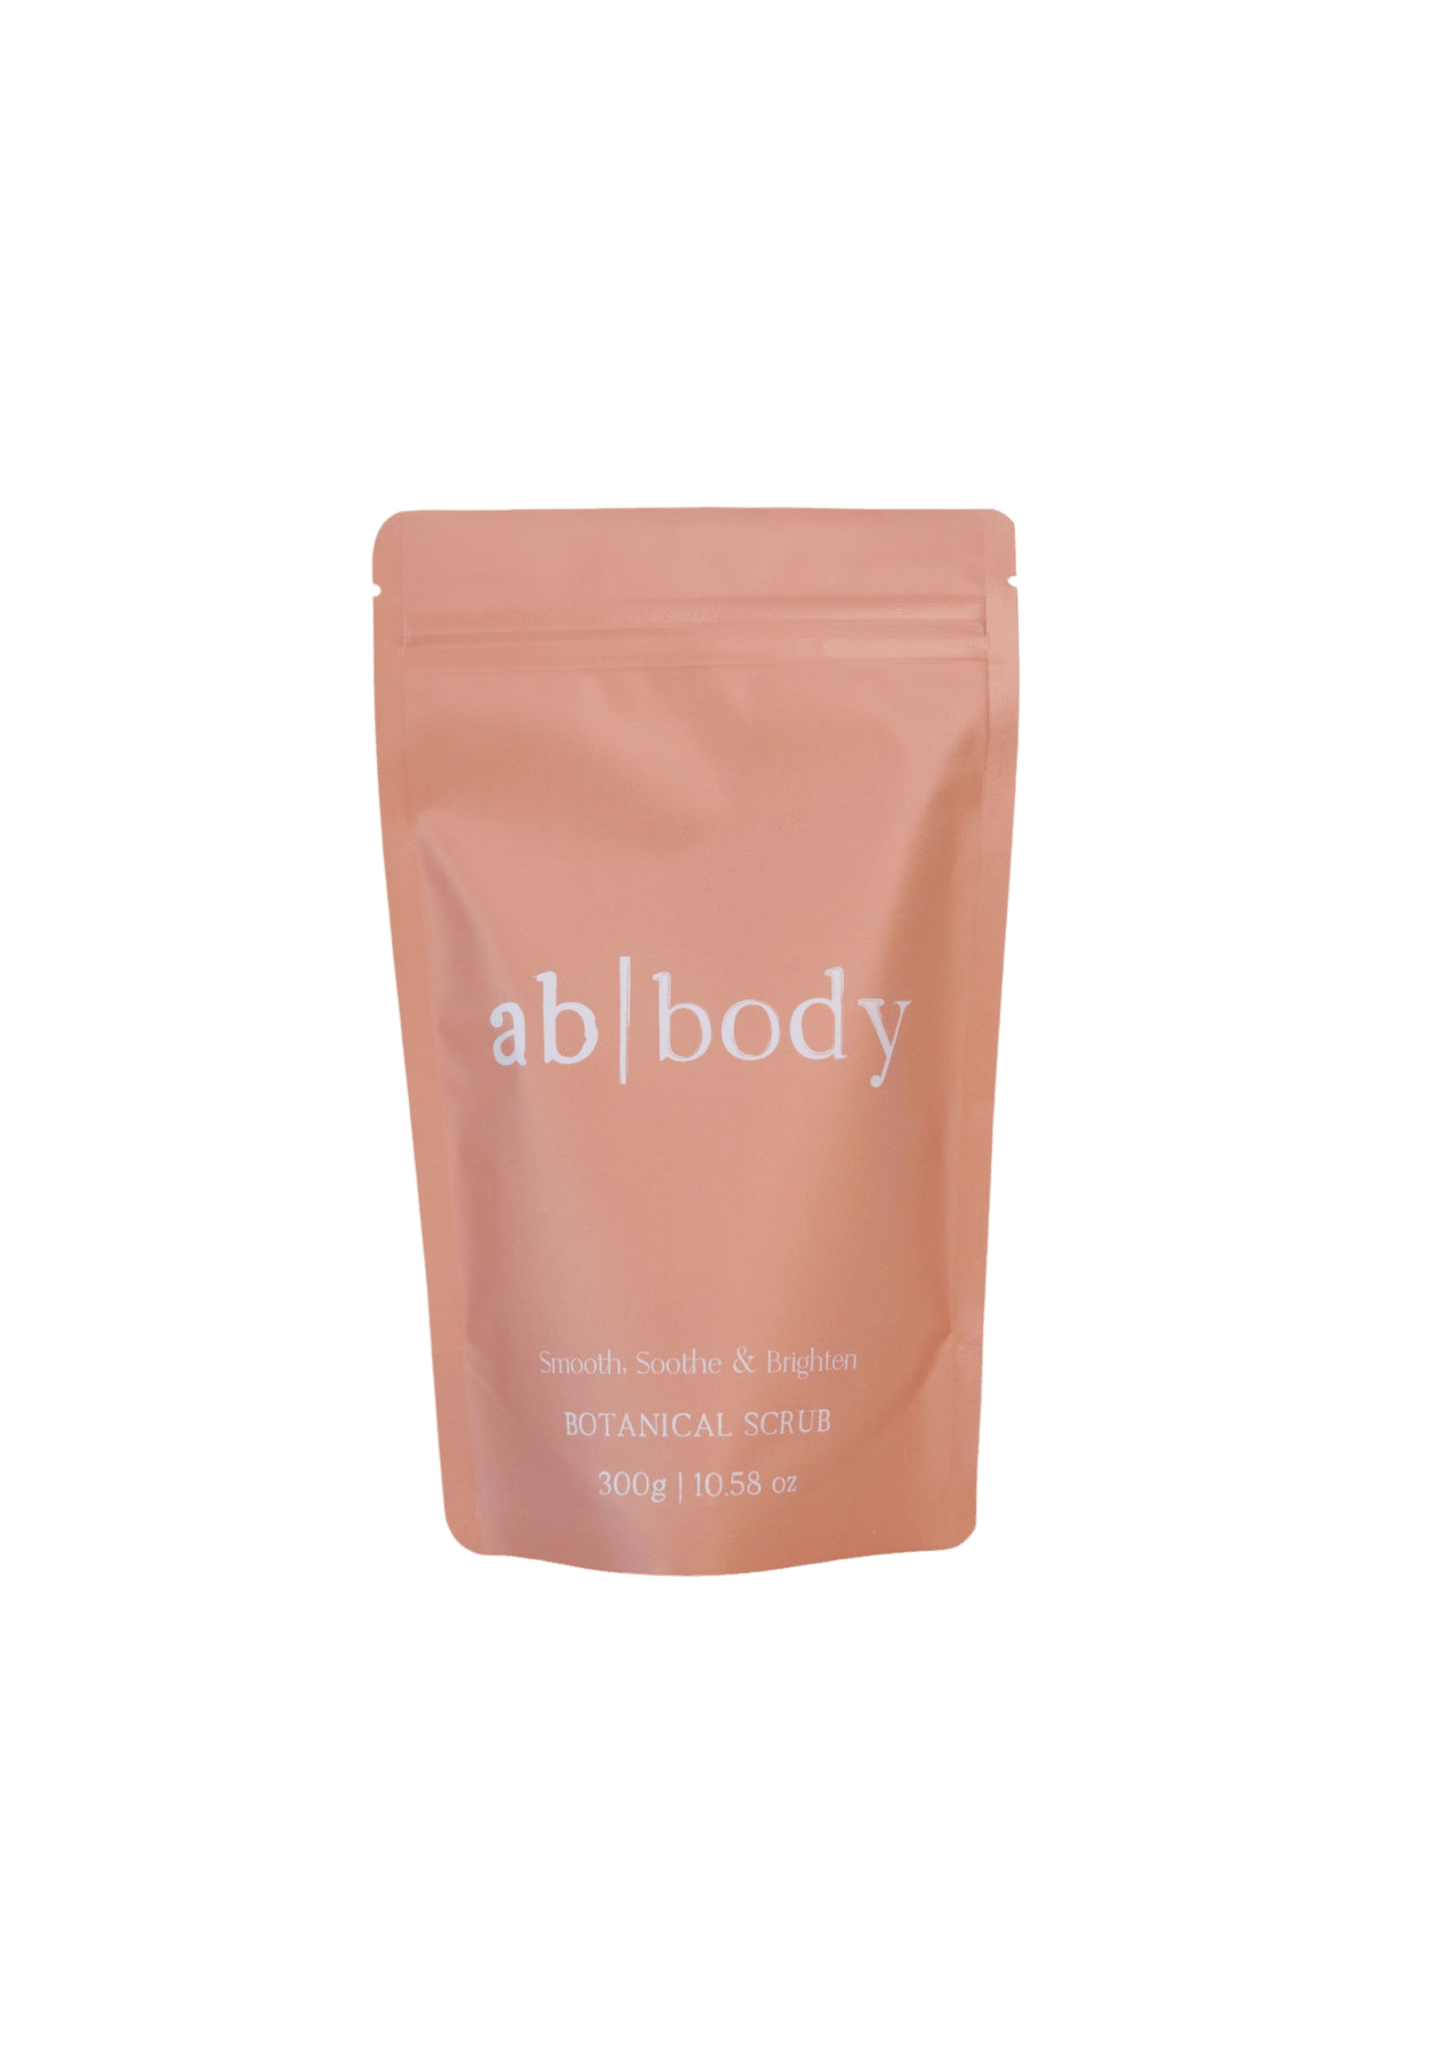 Botanical Scrub | Soothe, Smooth & Brighten - ab body